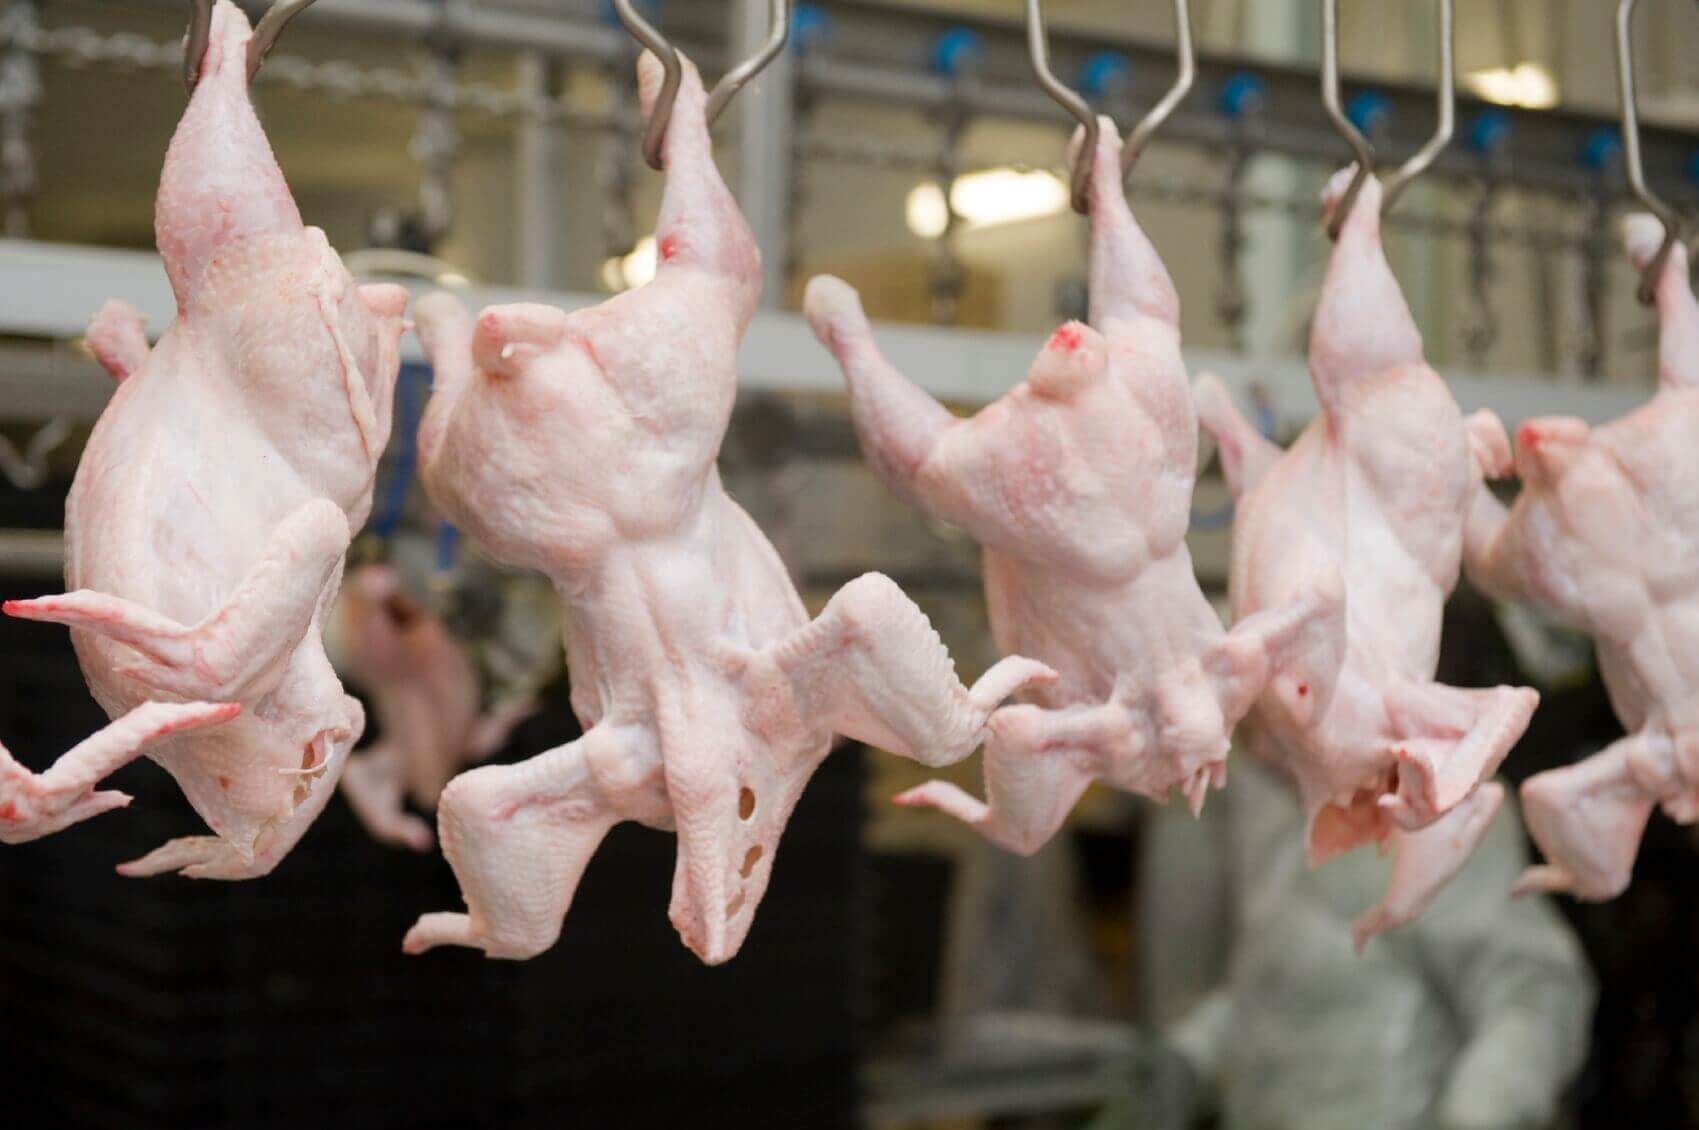 Производство курятины в Украине - AgroExpert.md